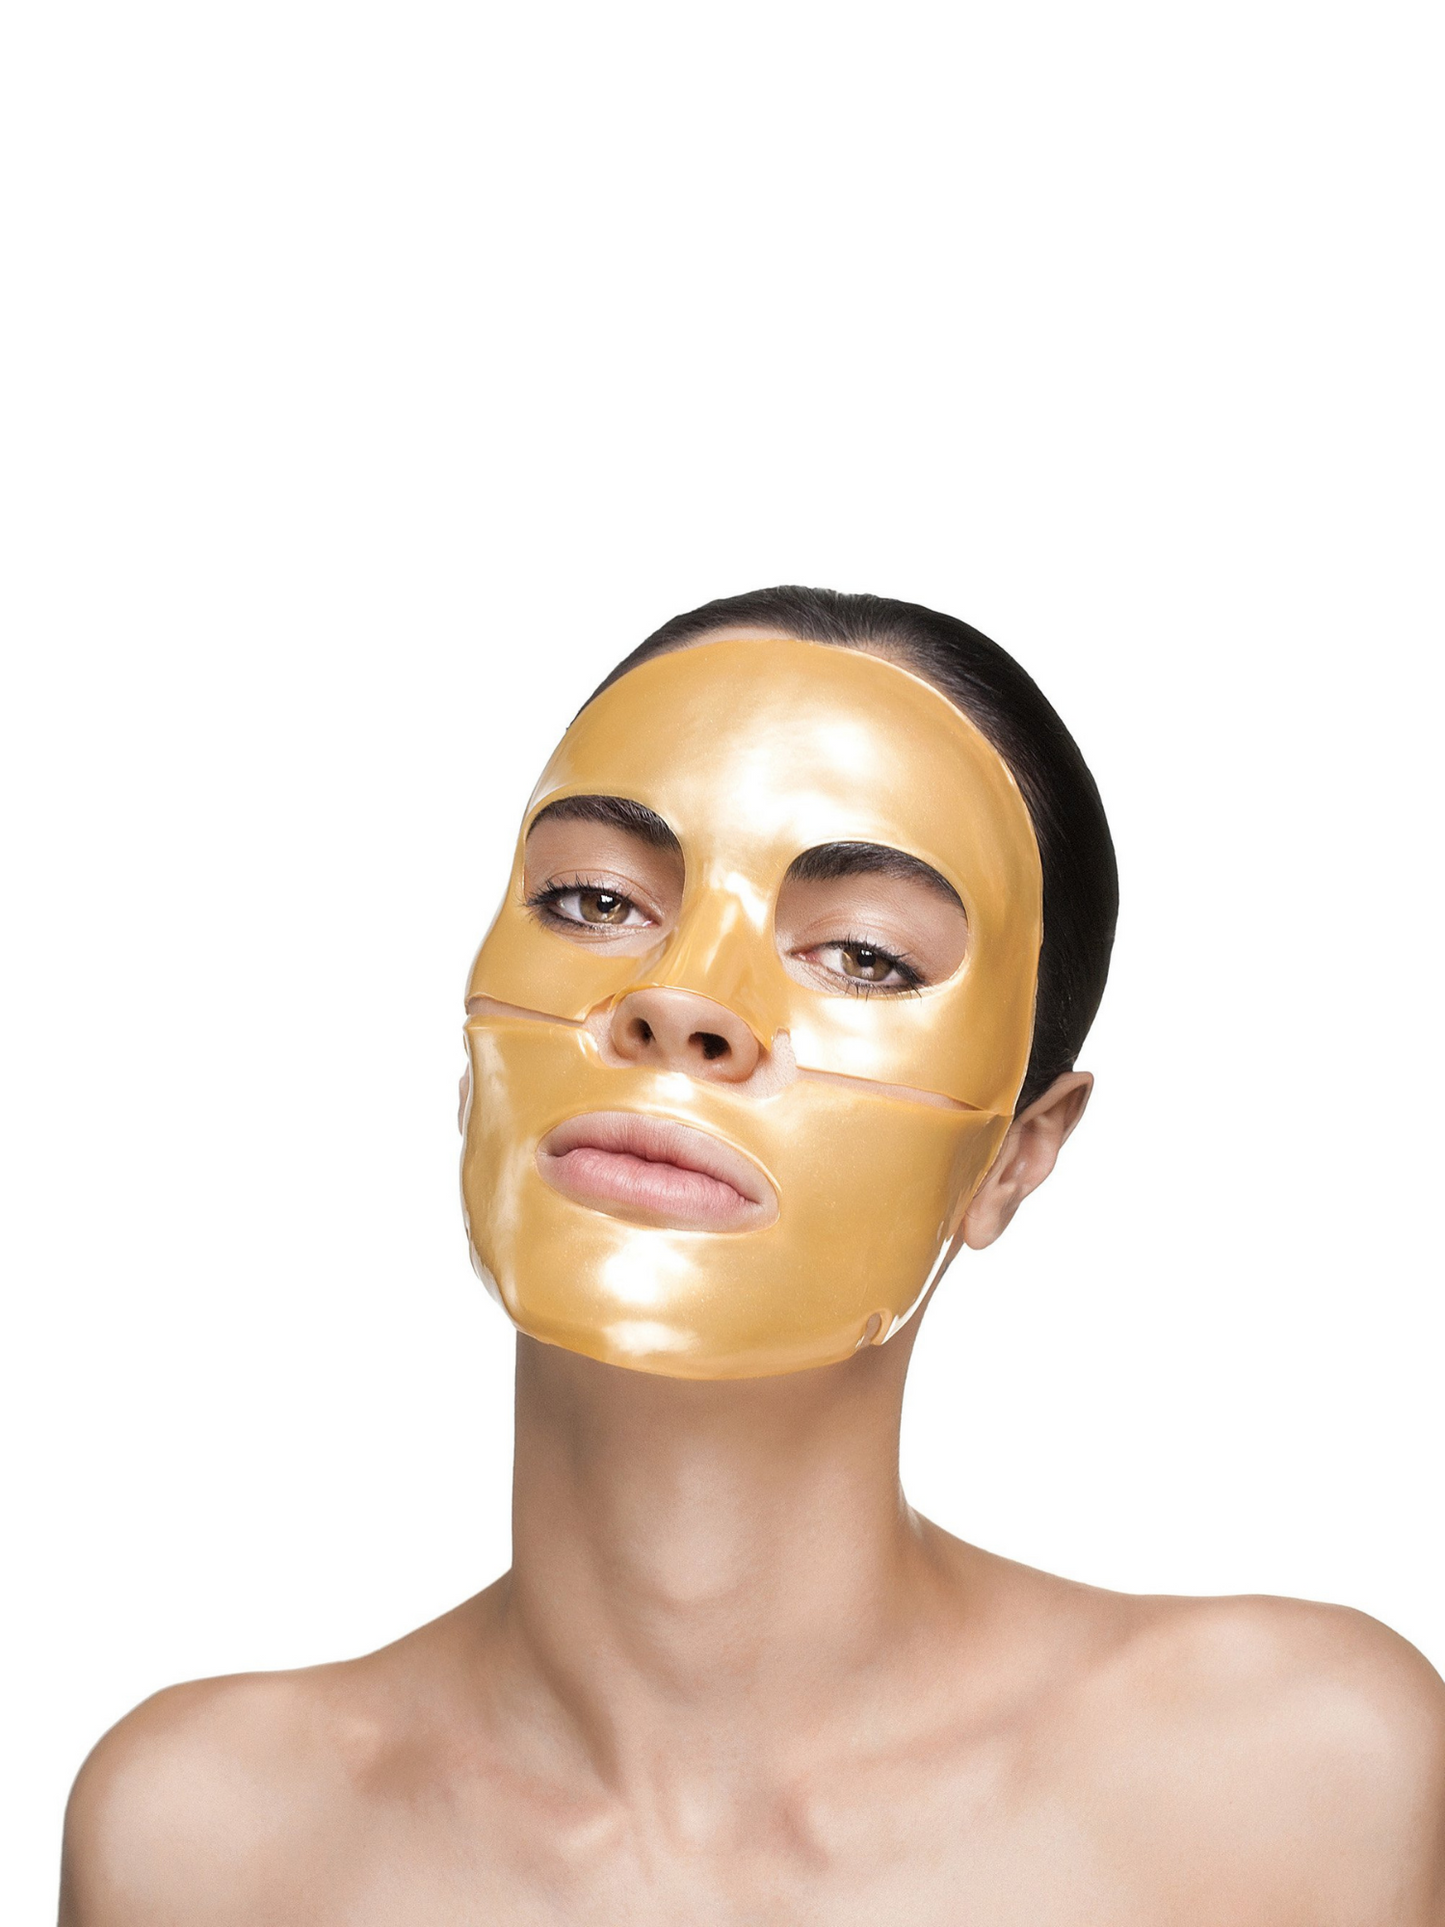 NANOGOLD Repair Collagen Face Mask